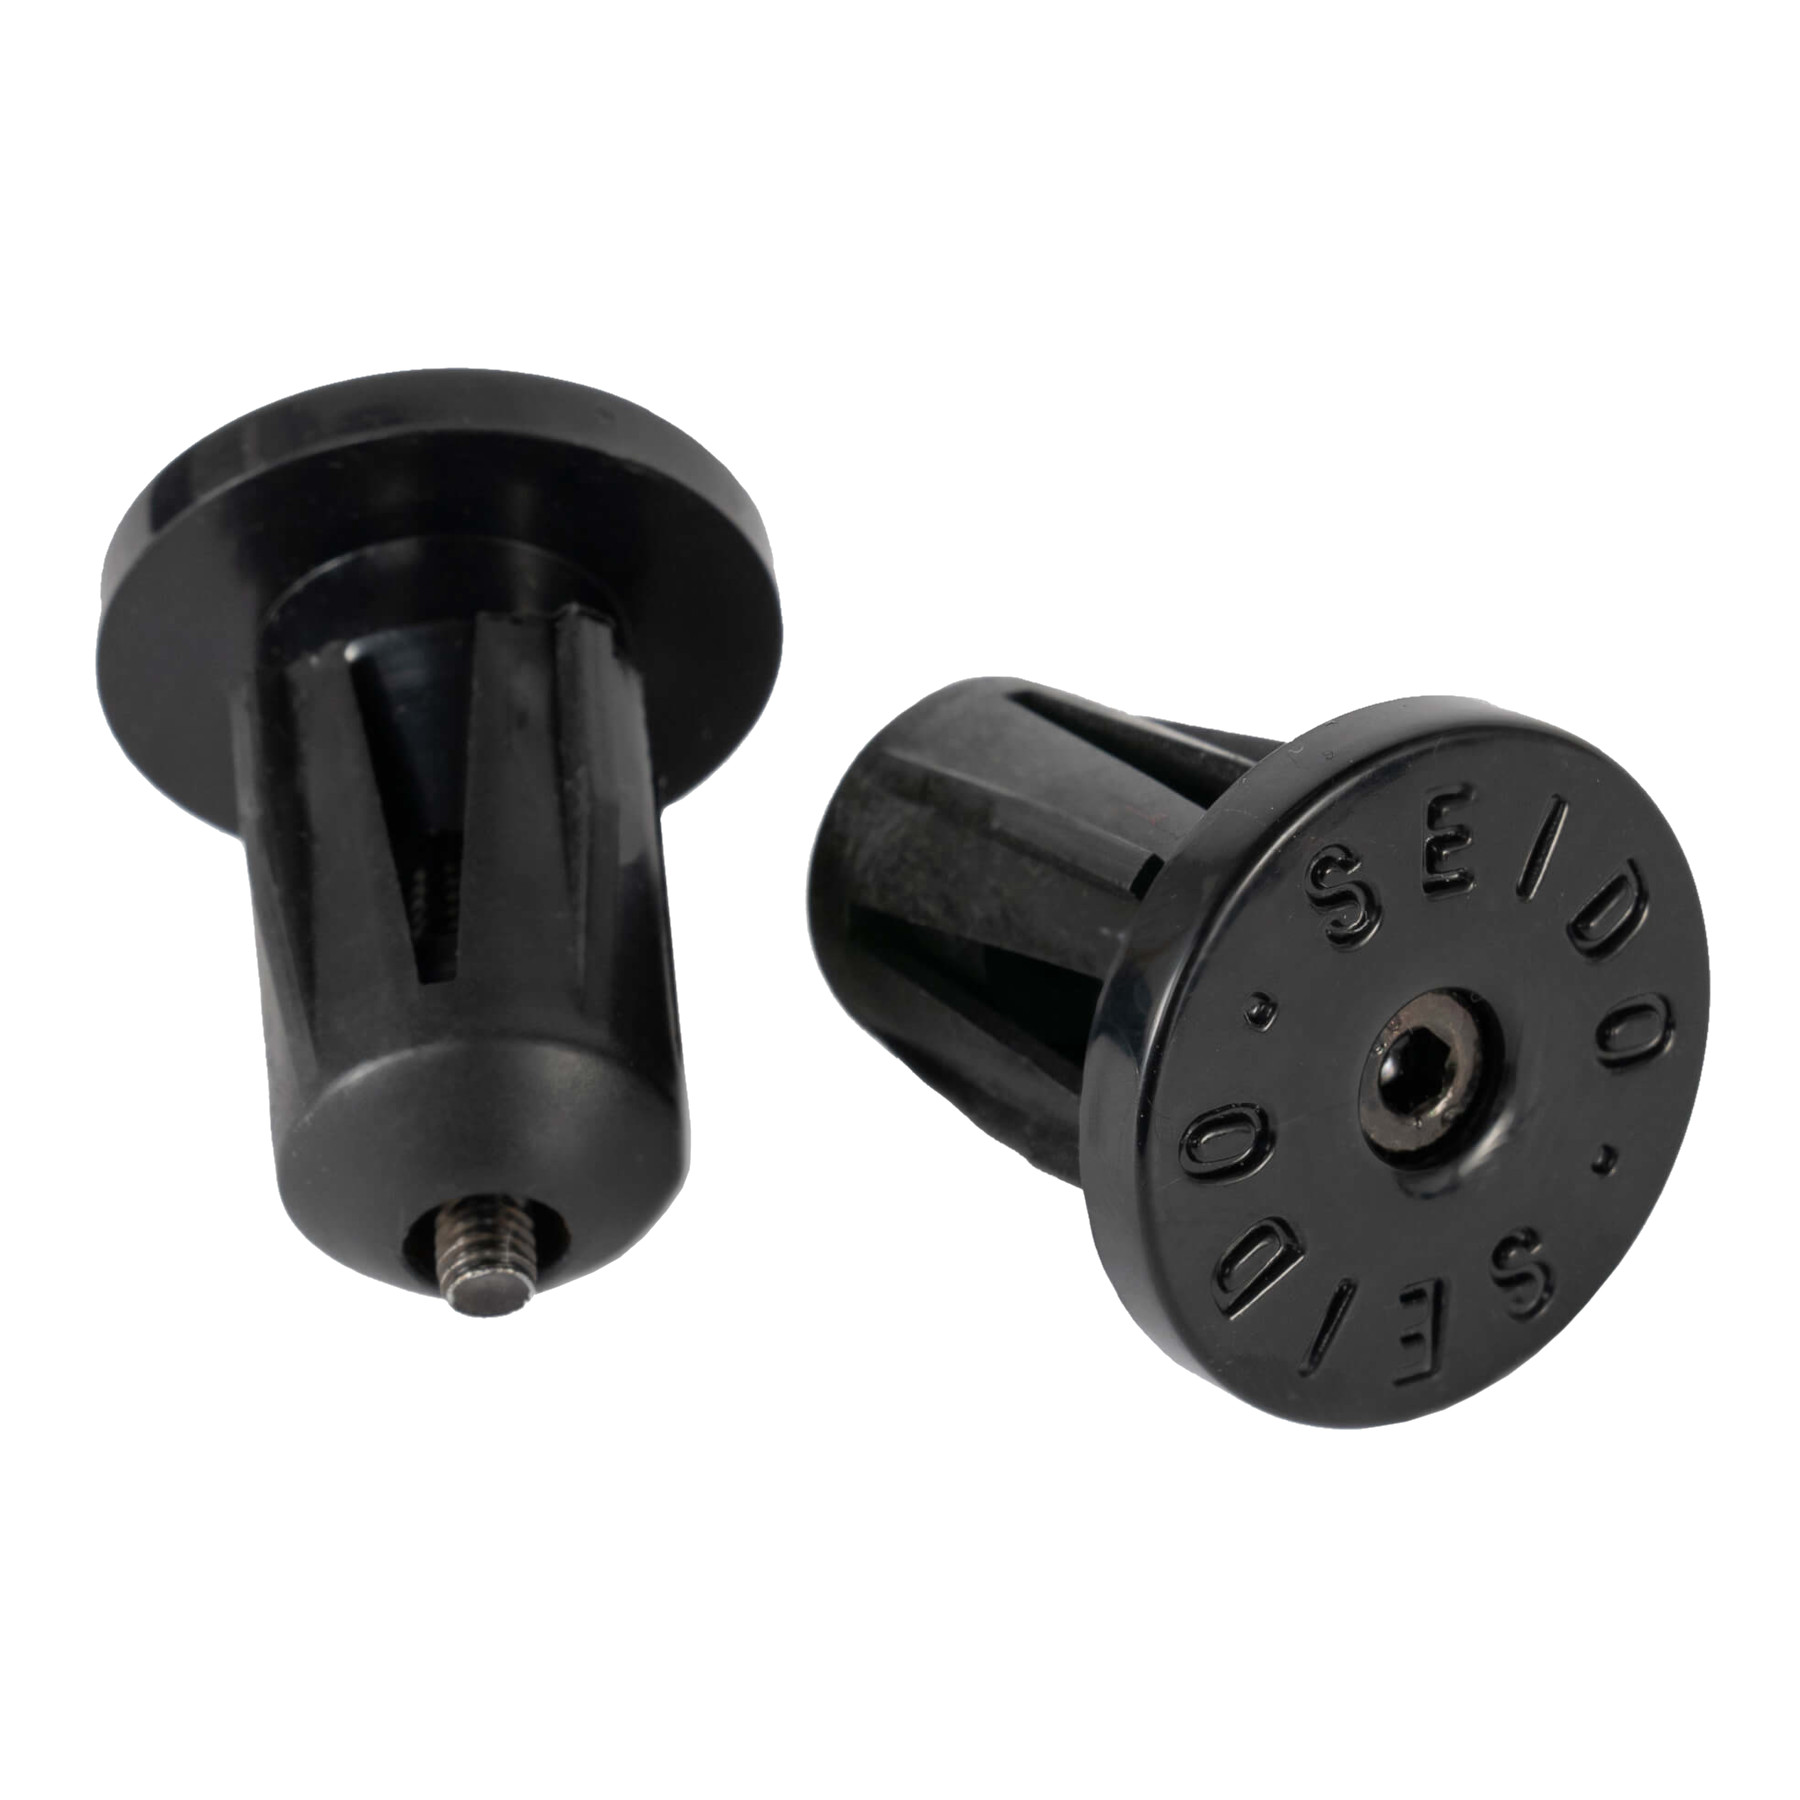 Productfoto van SEIDO INSERT Handlebar Plugs - black